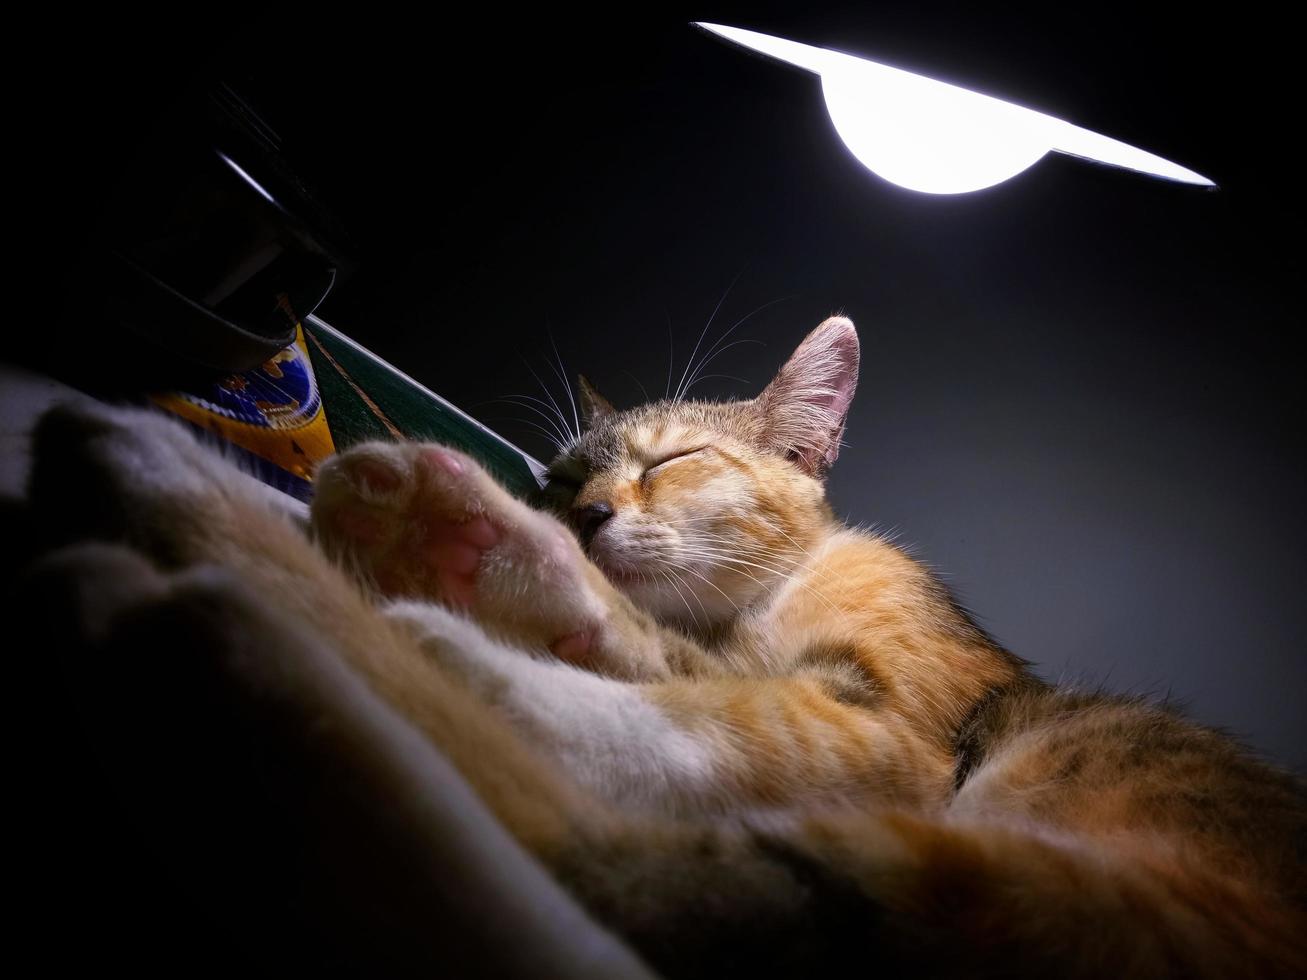 Photo of a sleeping cat illuminated by a bright light